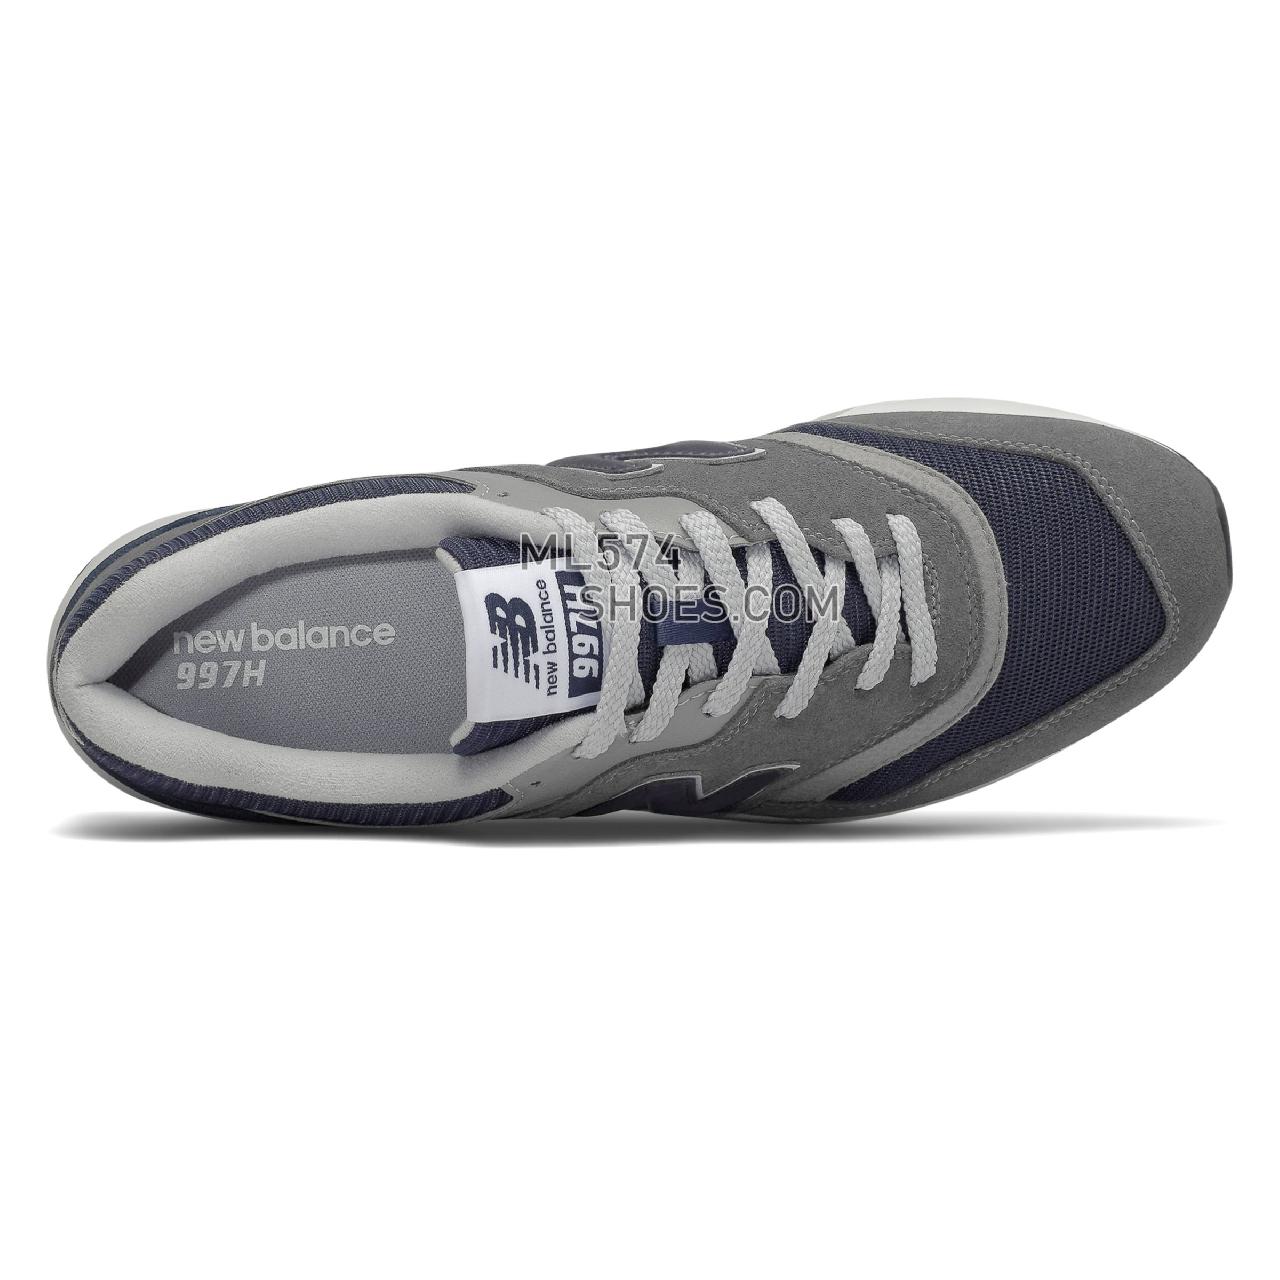 New Balance 997H - Men's Classic Sneakers - Castlerock with Natural Indigo - CM997HAX